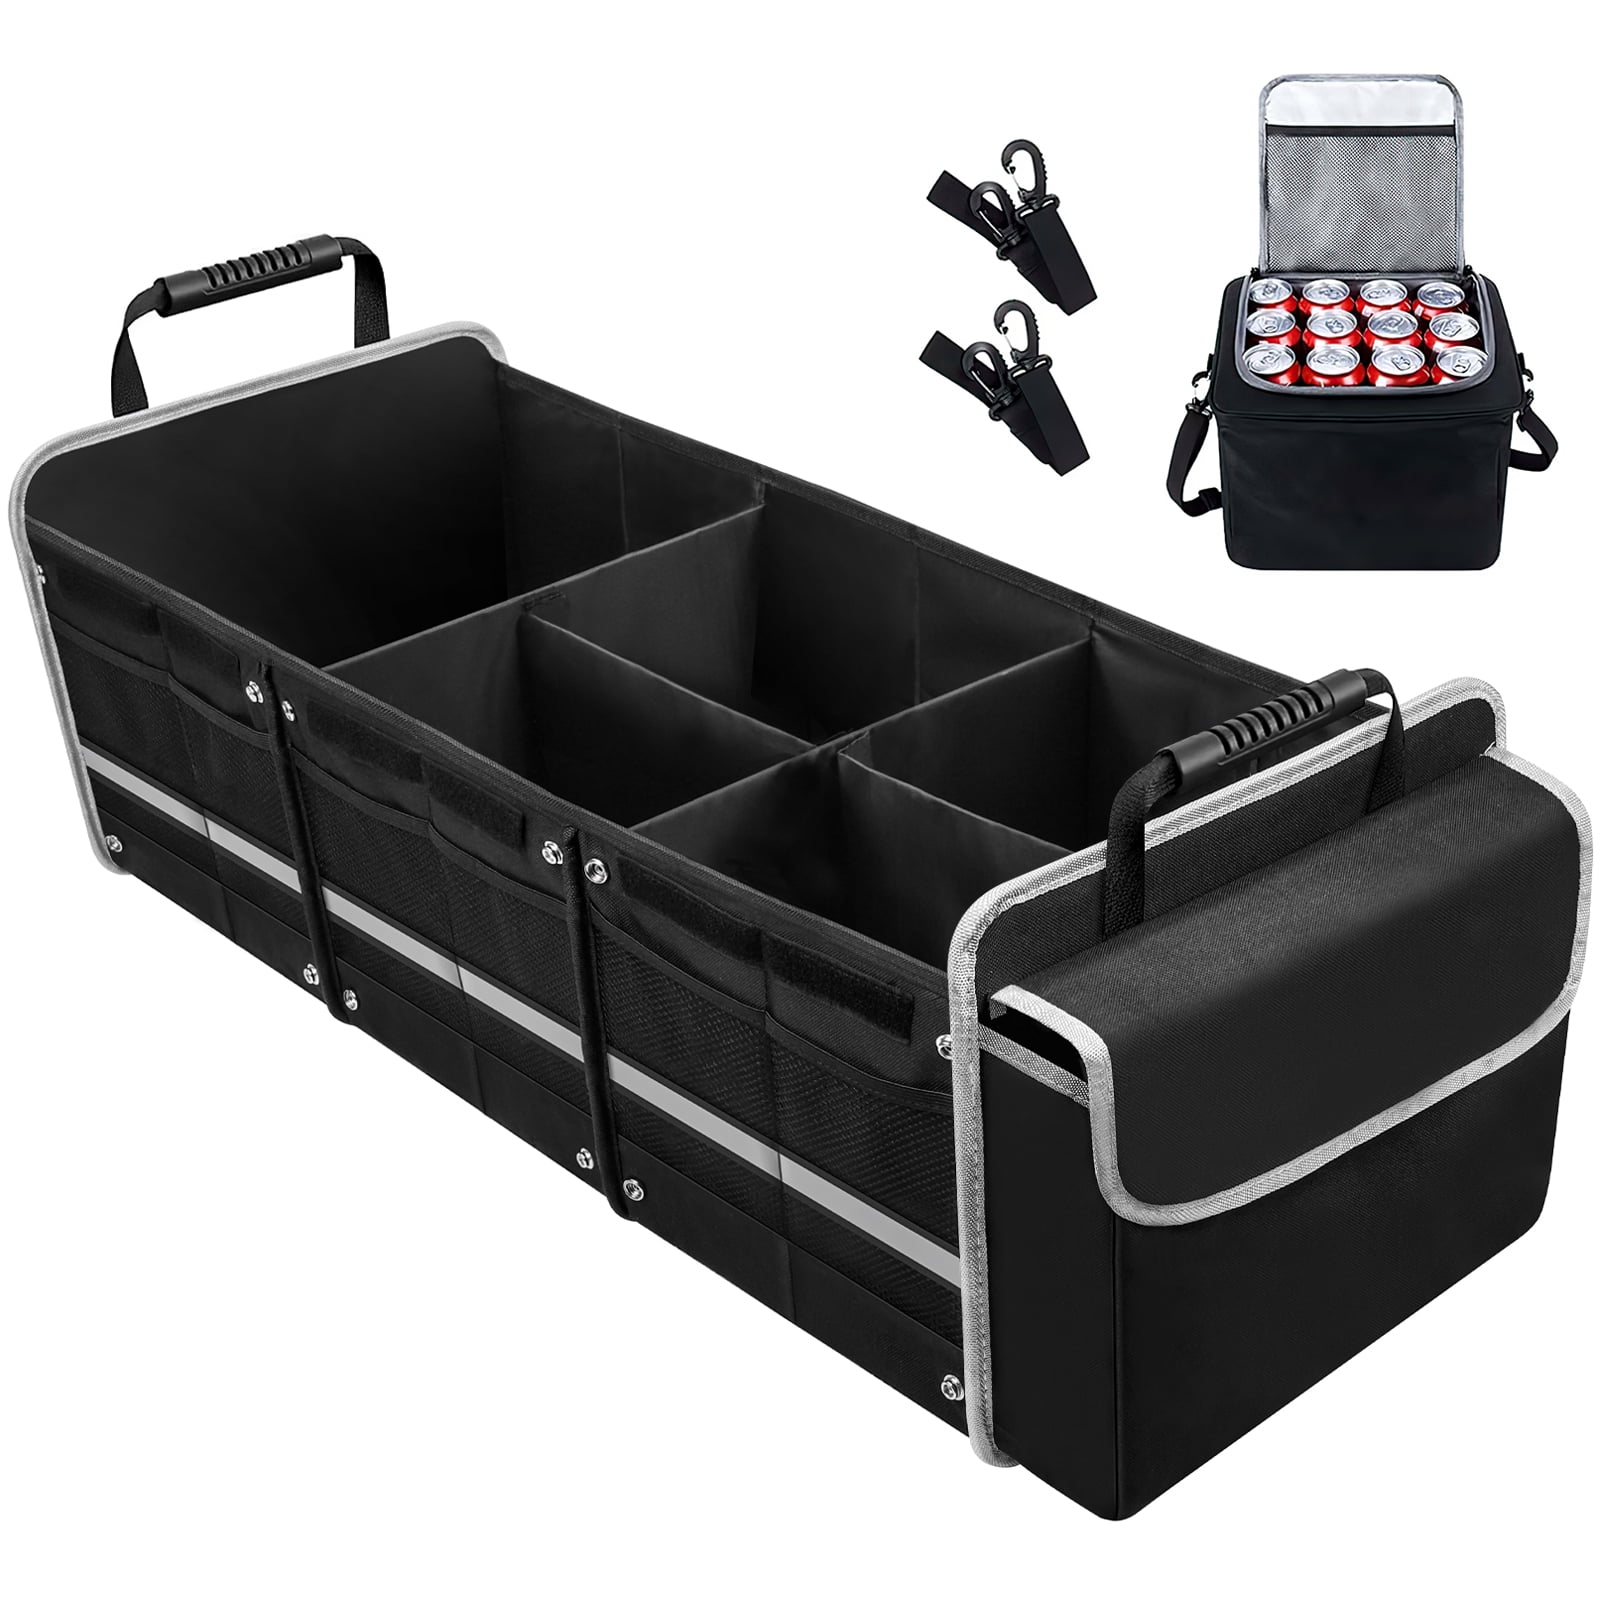 Trobo Trunk Organizer, Multipurpose Collapsible Car Storage Box